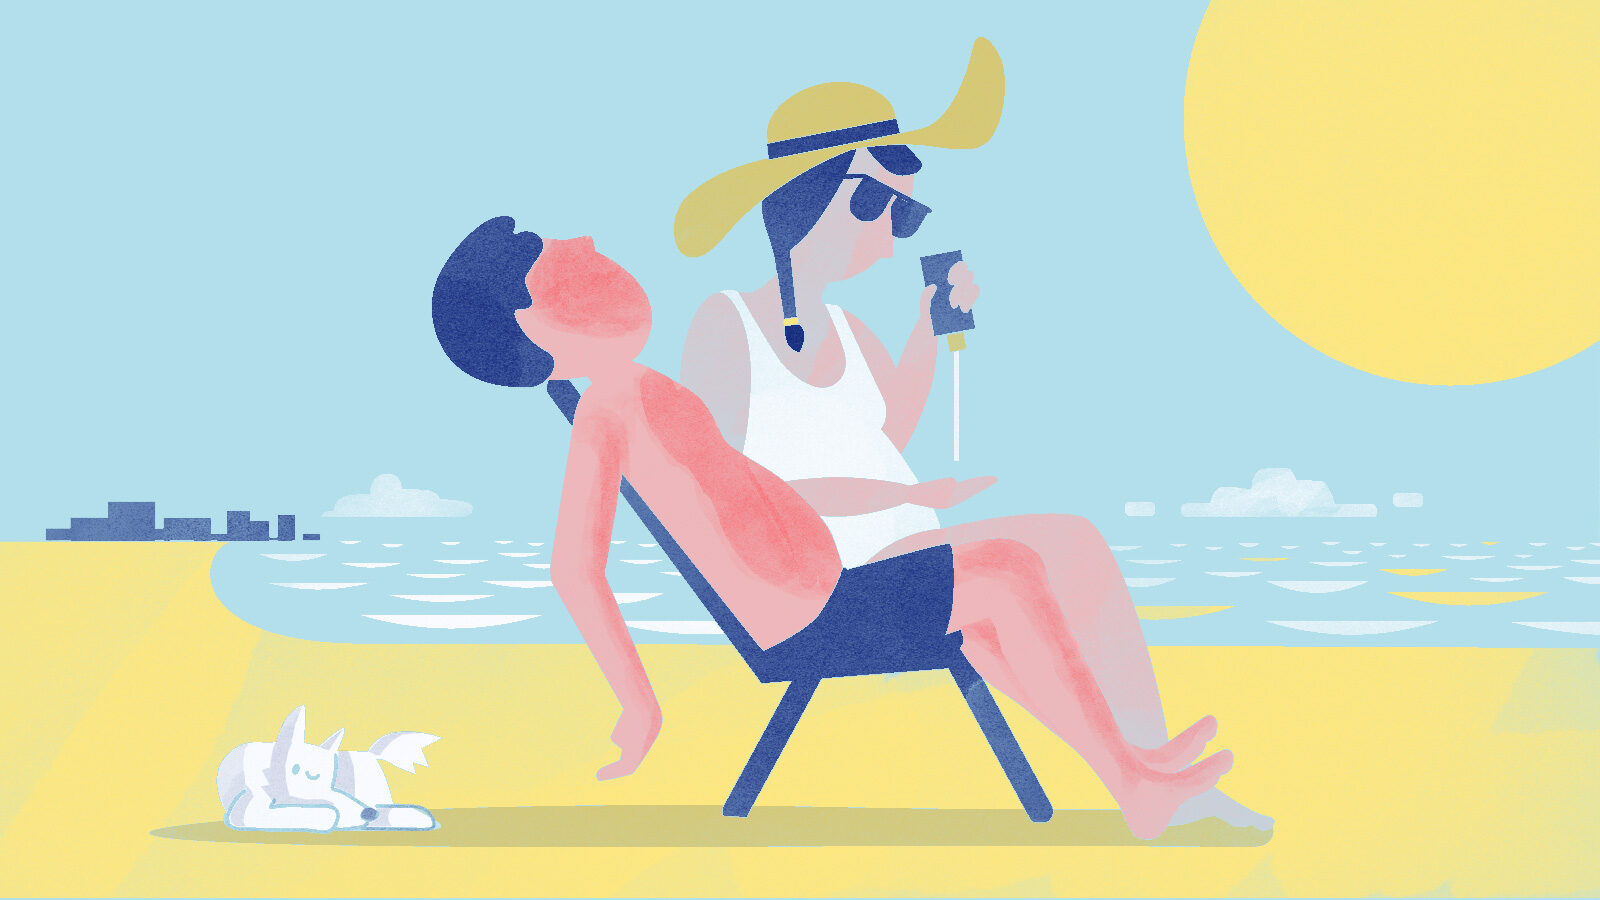 Illustration of a beach scene with a sunburned man